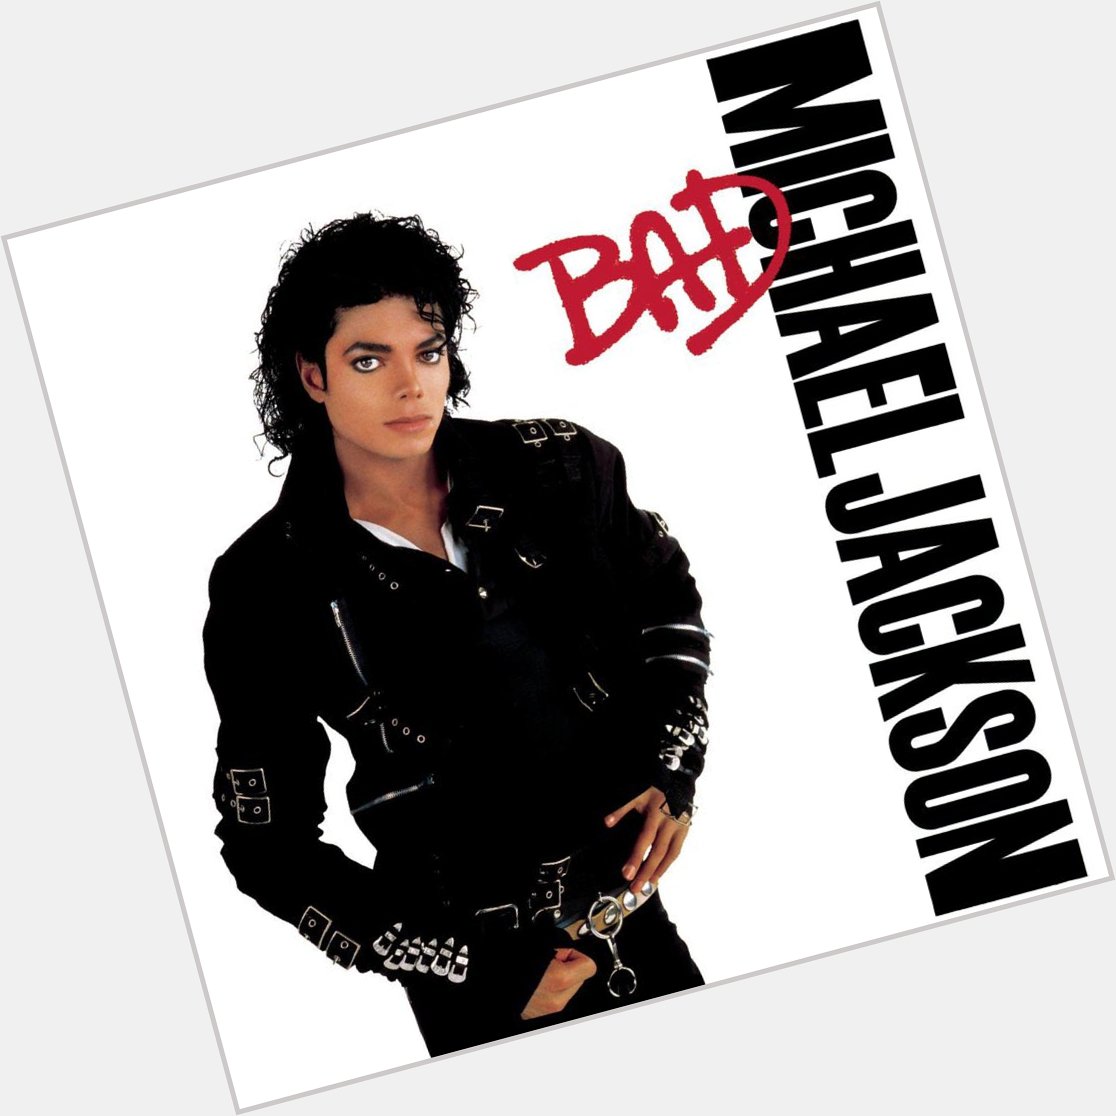 Happy 35th birthday to my fav Michael Jackson album Bad      